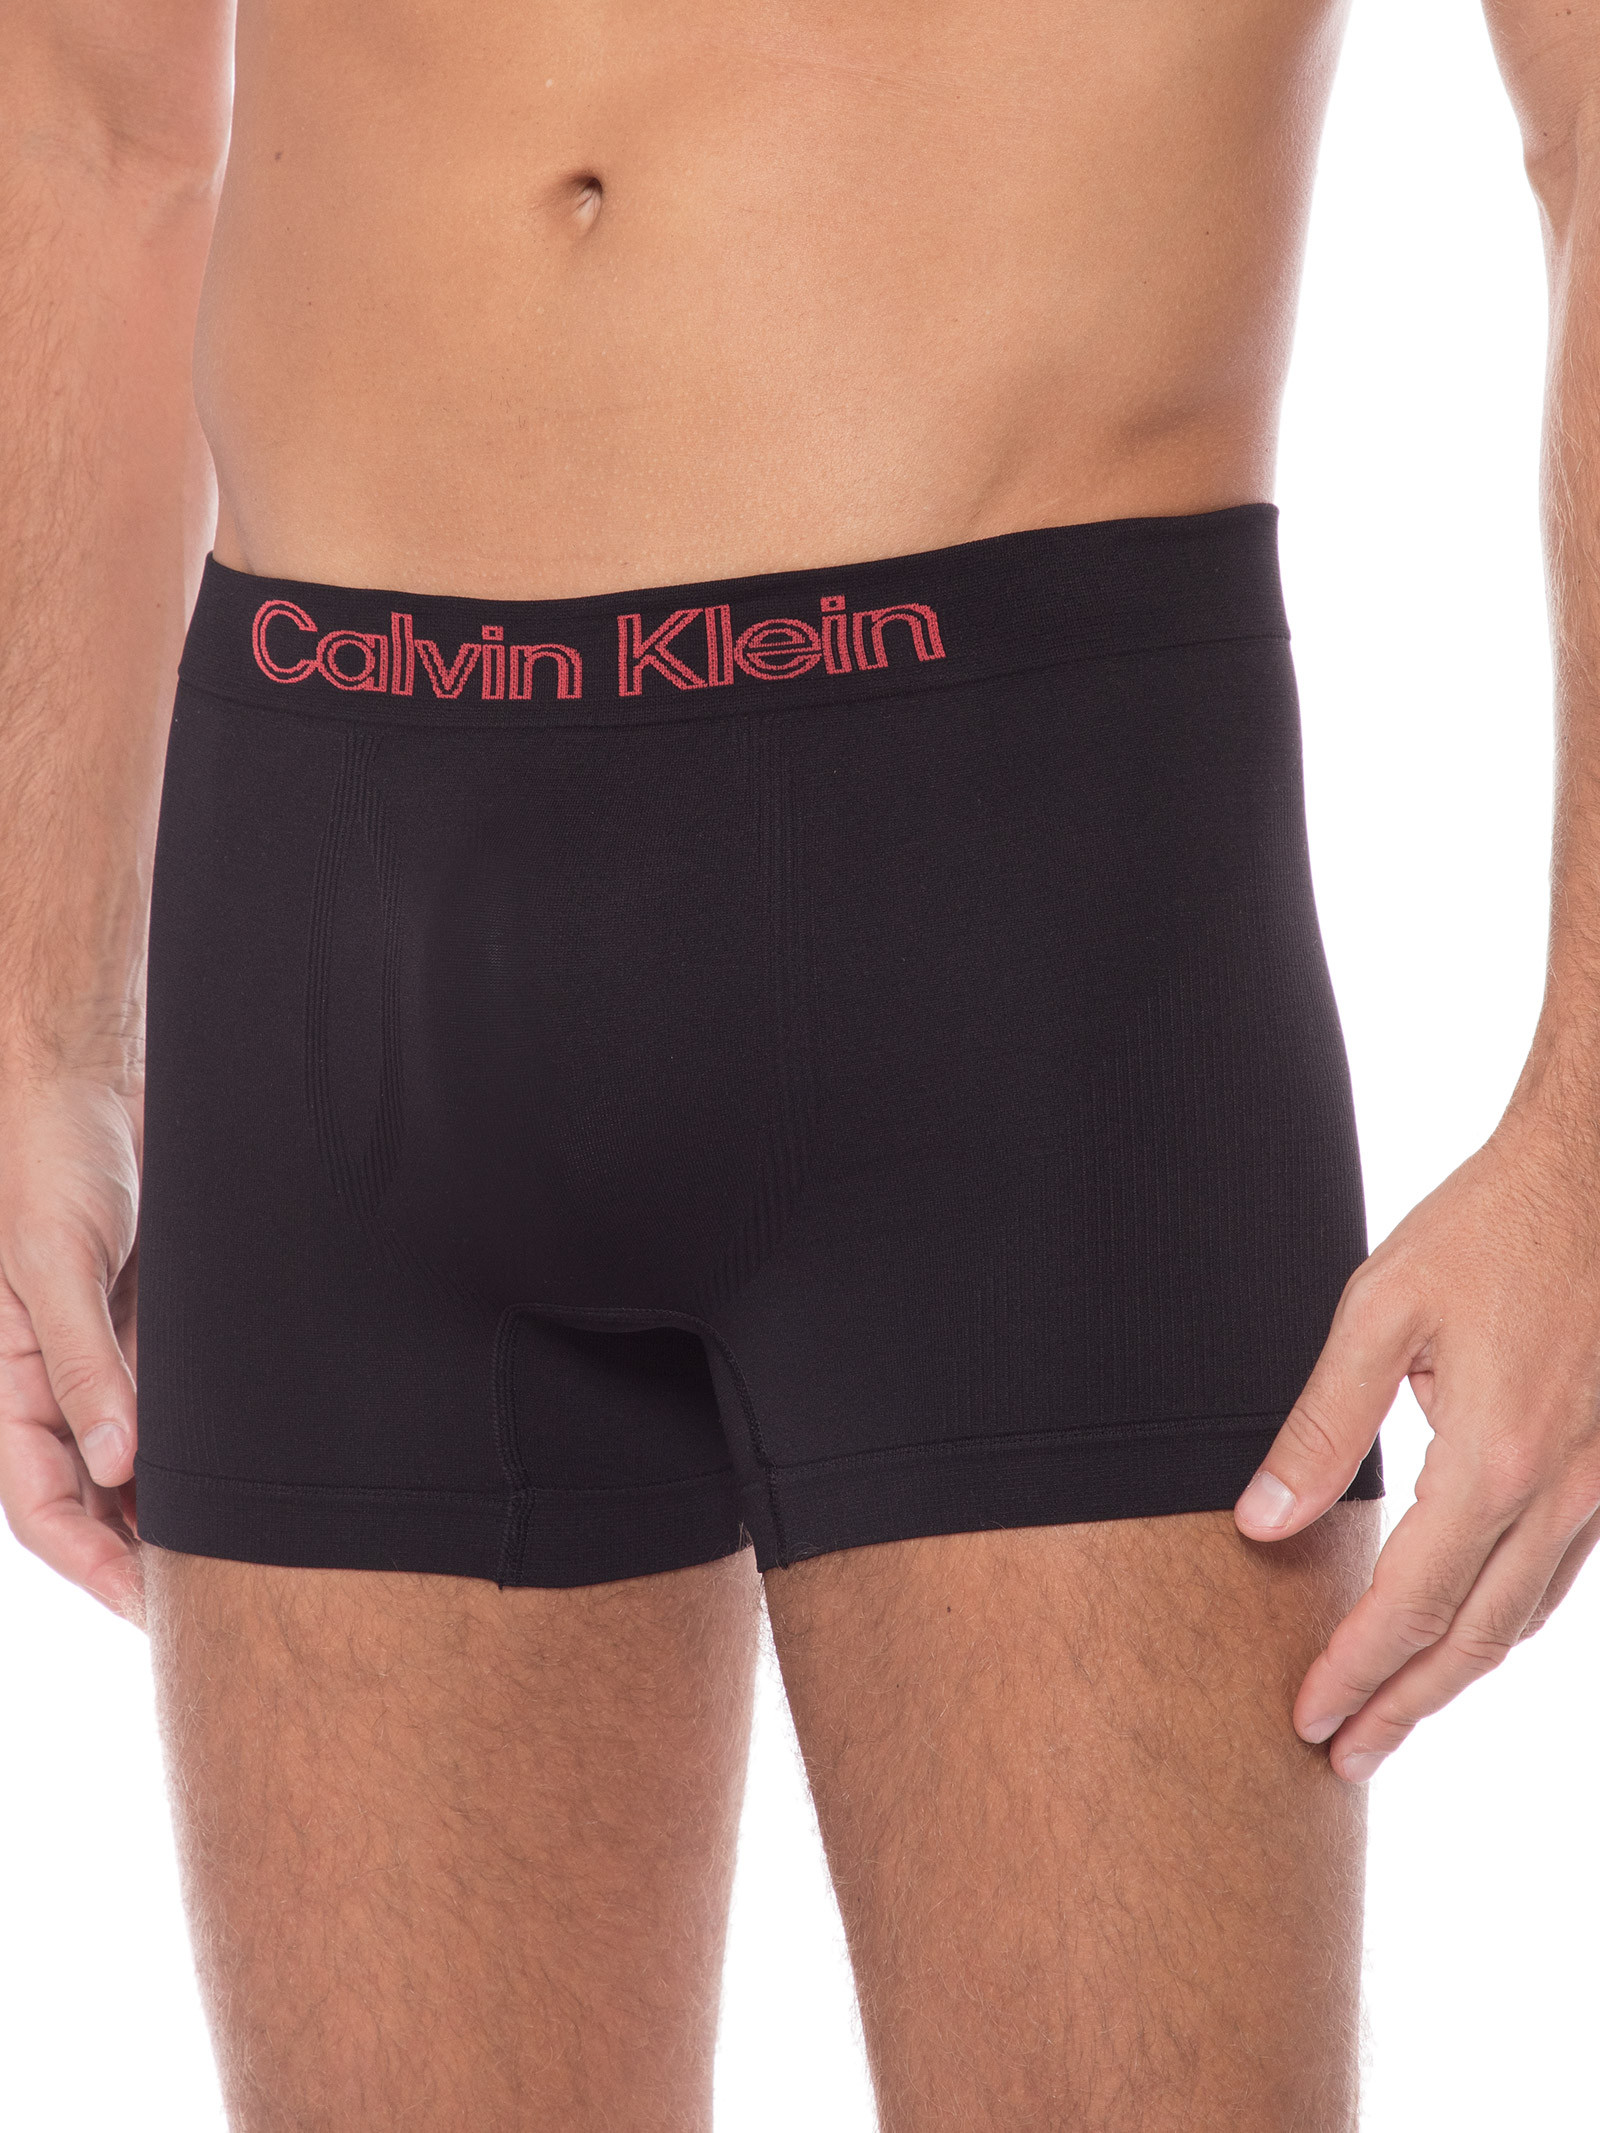 Boxers Calvin Klein Low Rise (3 unidades)